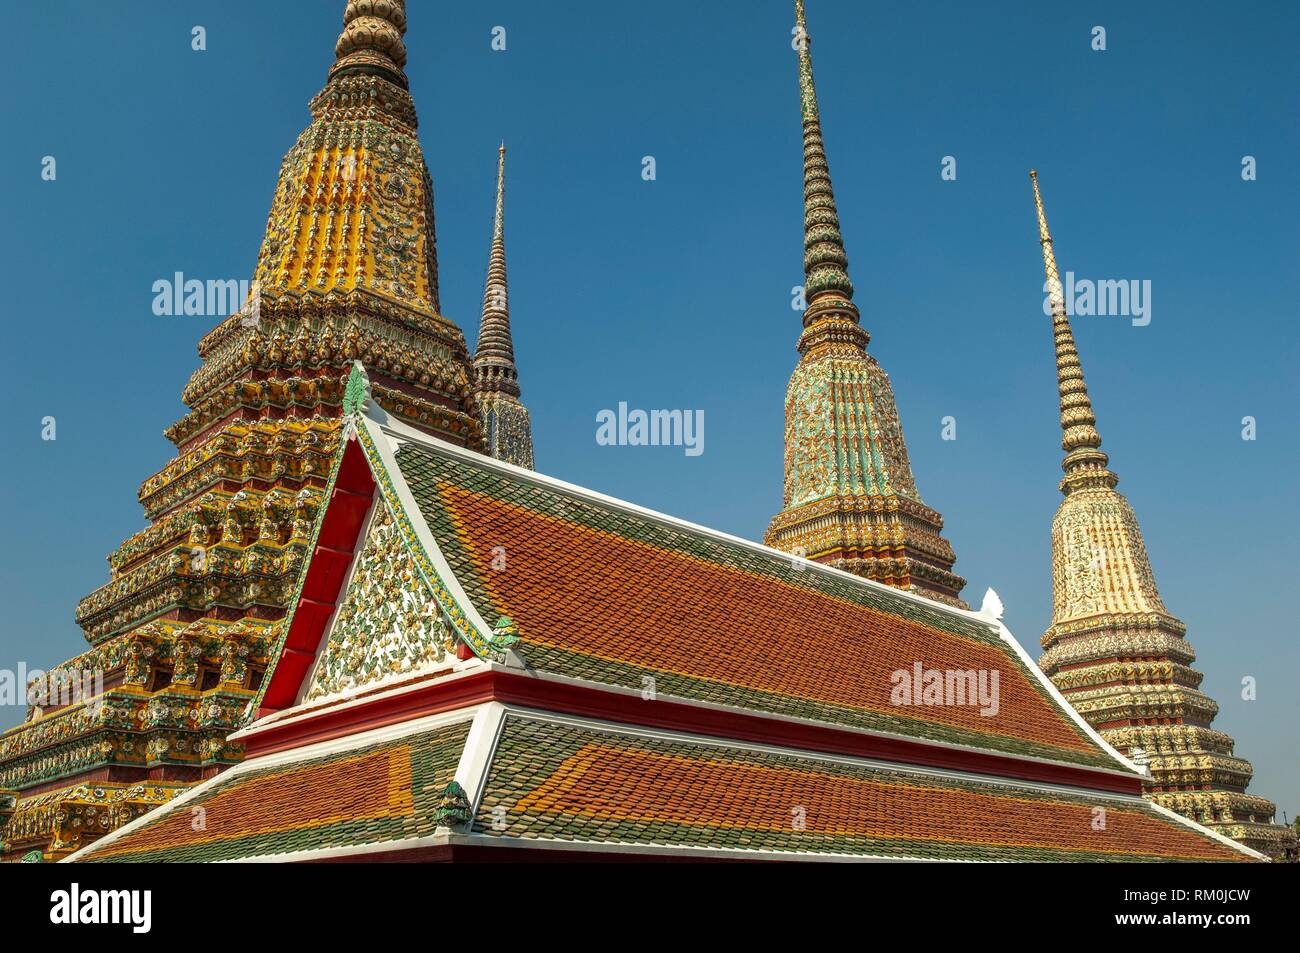 Wat Pho - Temple of the Reclining Buddha, its official name is Wat Phra Chetuphon Vimolmangklararm Rajwaramahaviharn, Phra Nakhon district, Bangkok, Stock Photo